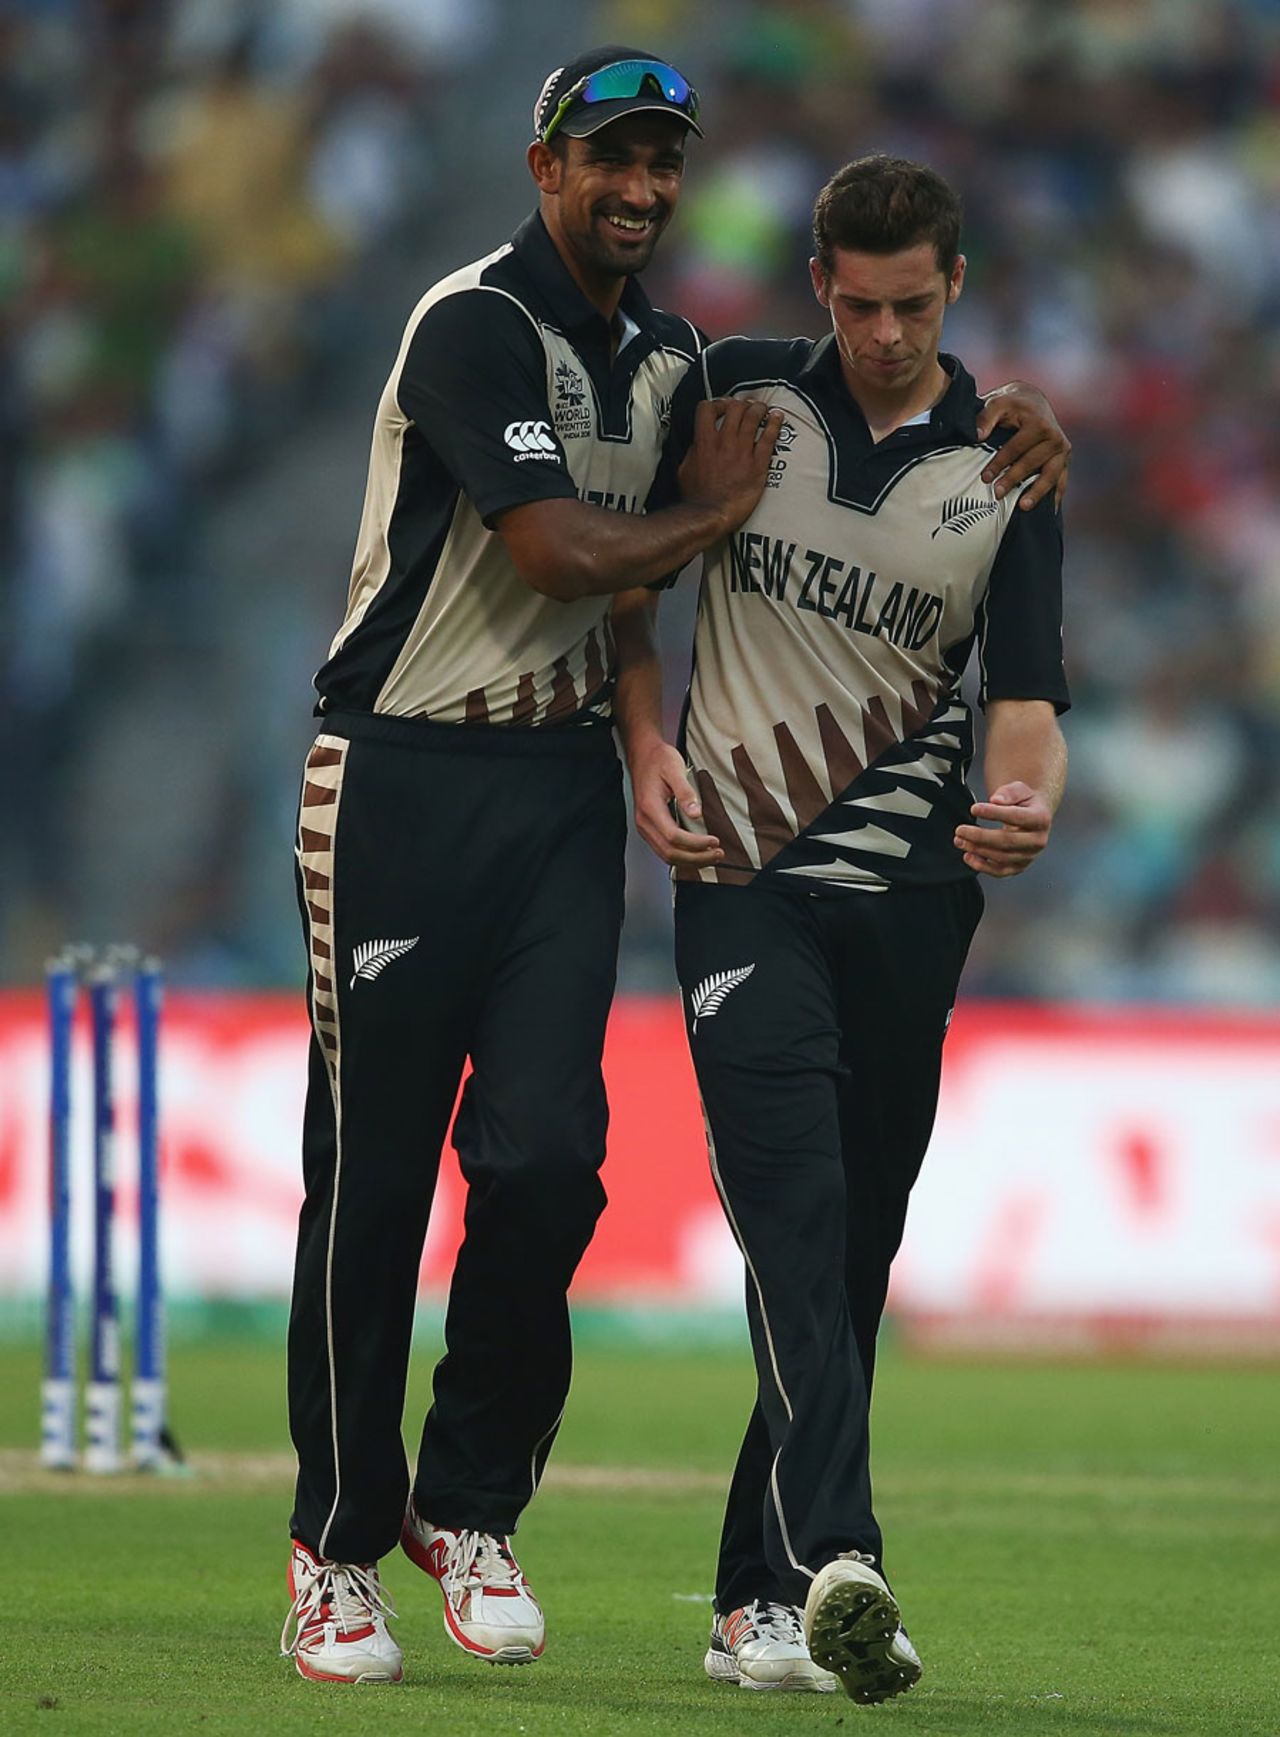 Ish Sodhi and Mitchell Santner share the joy of a wicket, Bangladesh v New Zealand, World T20 2016, Group 2, Kolkata, March 26, 2016